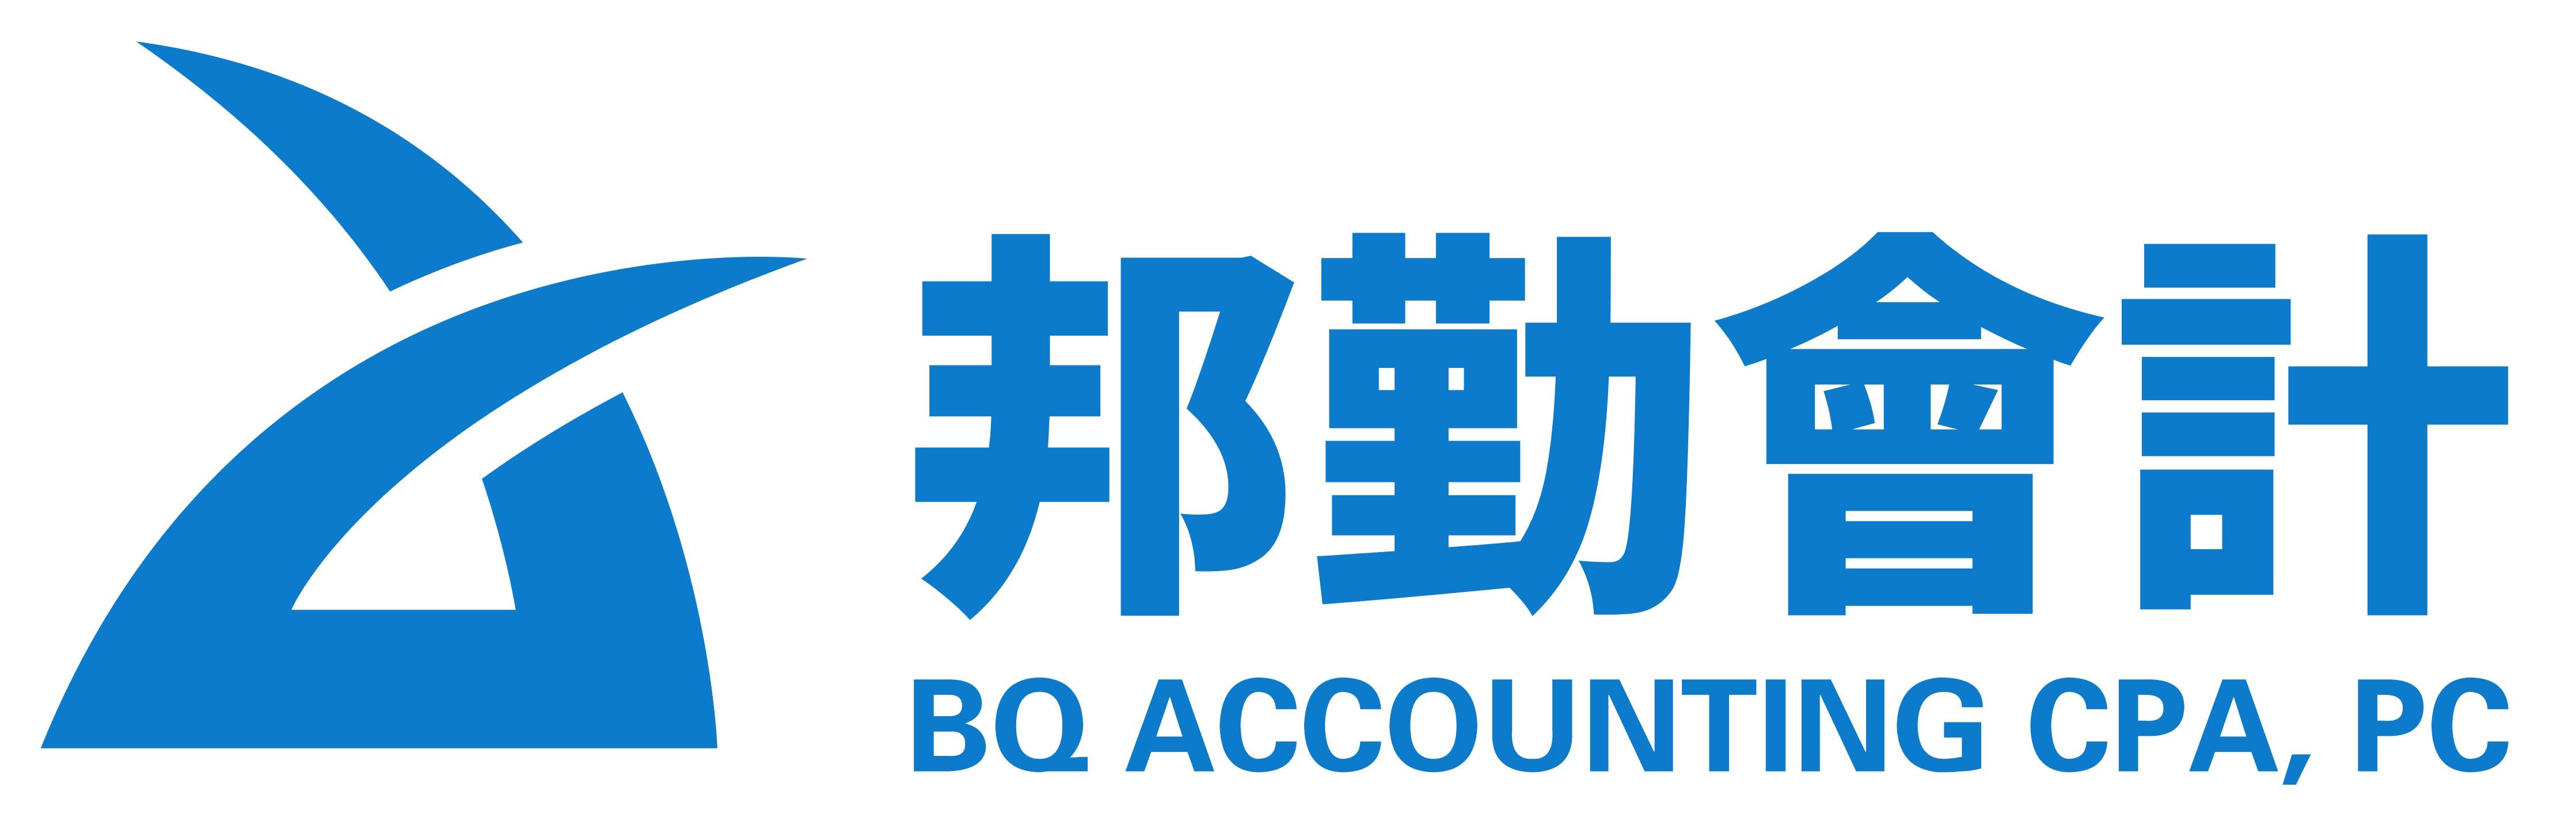 Bq Logo - BQ CPA | 邦勤會計 – Welcome to BQ Accounting CPA, PC | Accountants ...